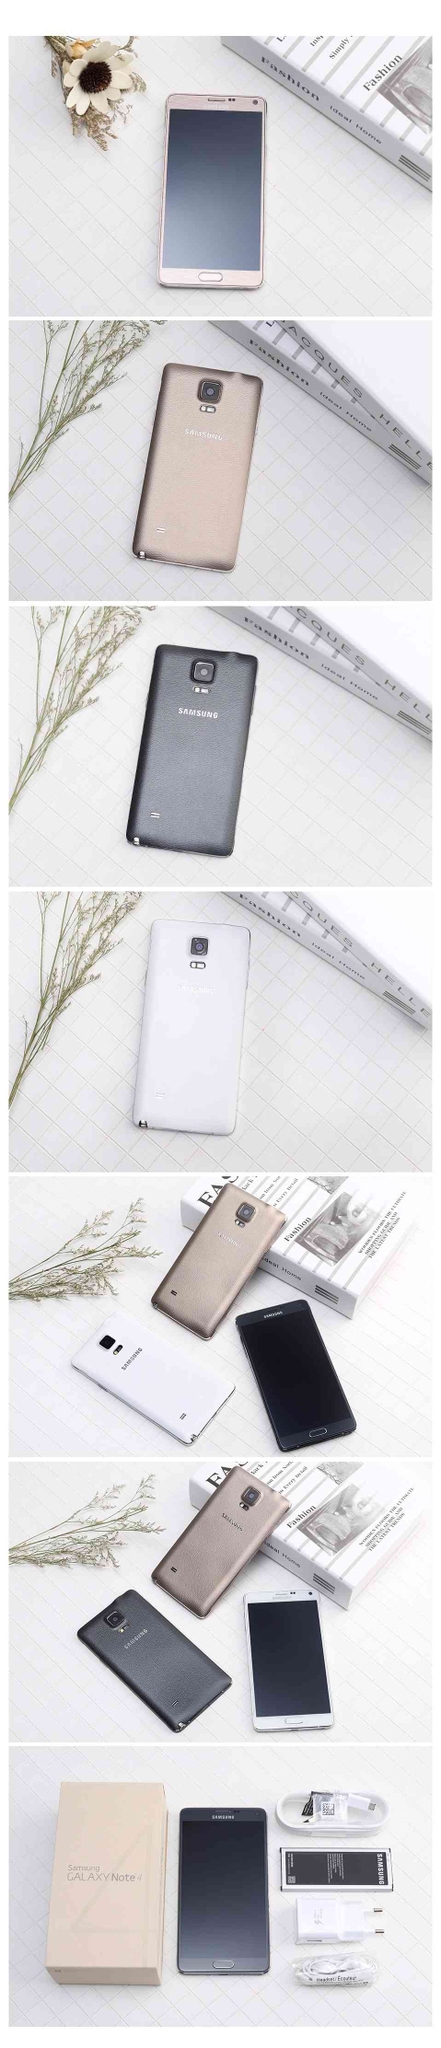 Refurbished Samsung Galaxy Note 4 Unlocked Note4 5.7'' inch 16MP 3GB RAM + 16GB ROM Smartphone white 2